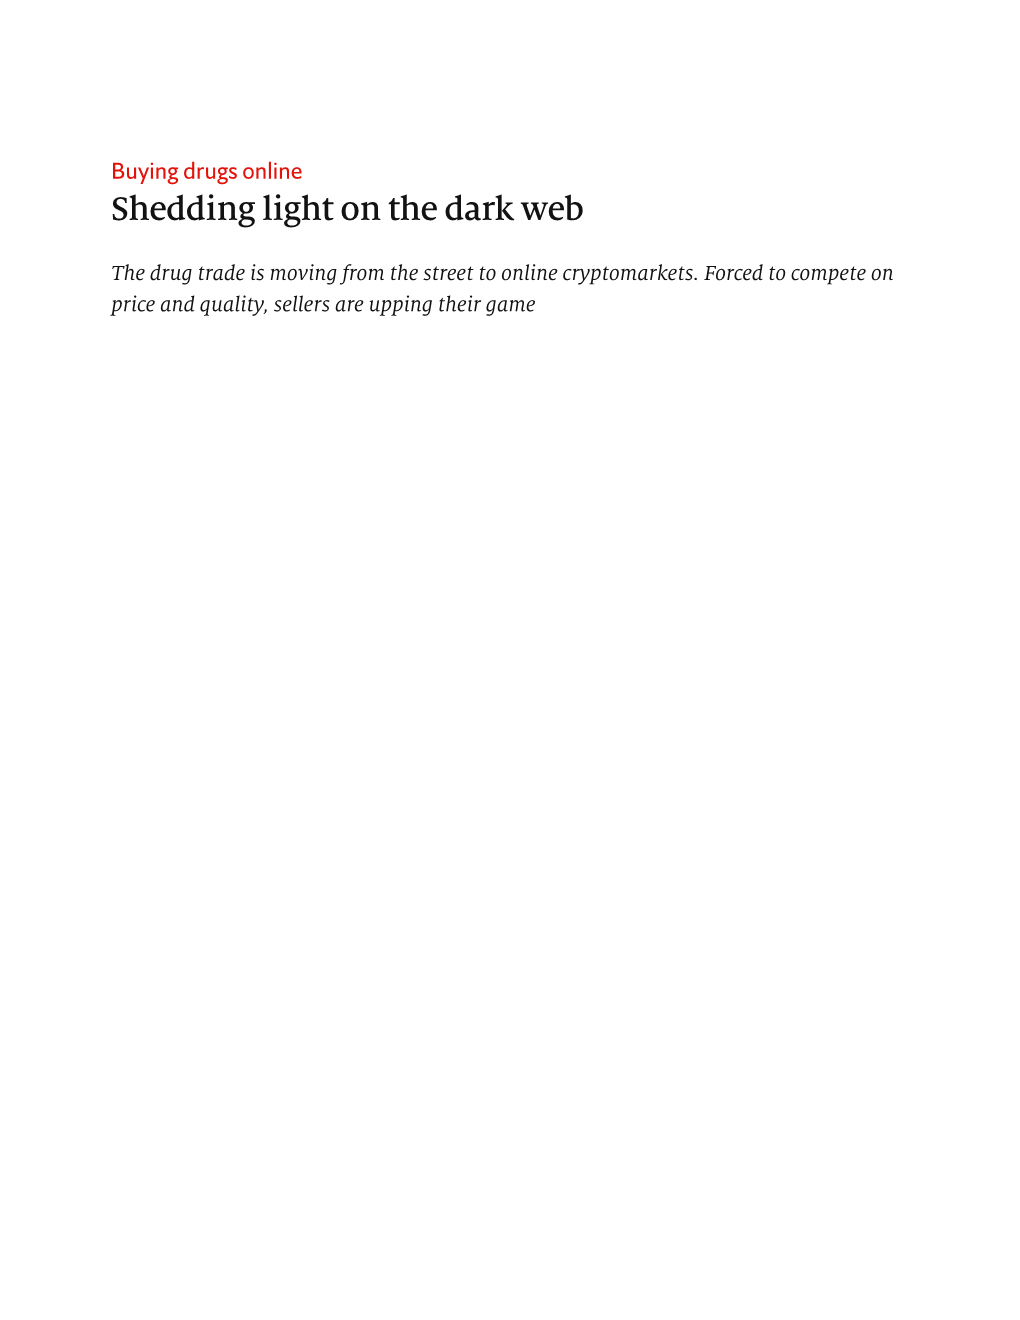 Shedding Light on the Dark Web